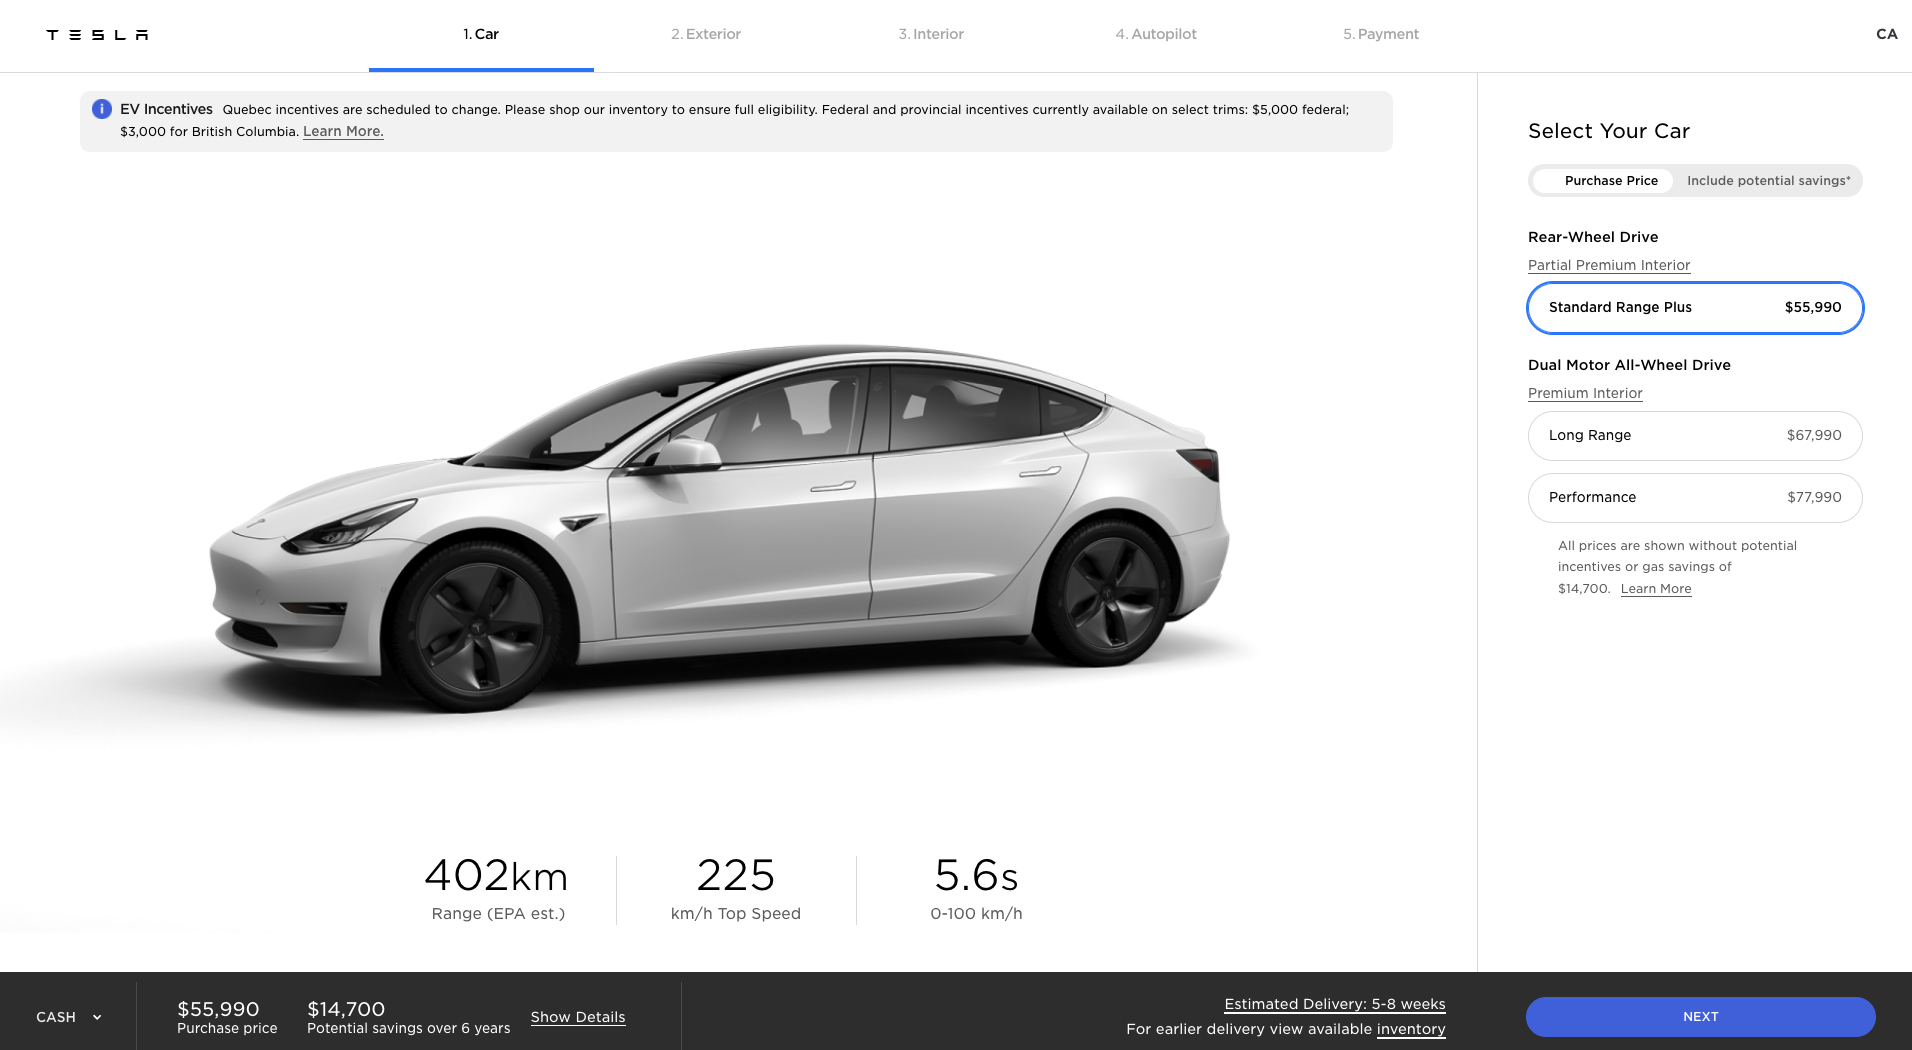 Tesla Model 3 Design Studio after price increase